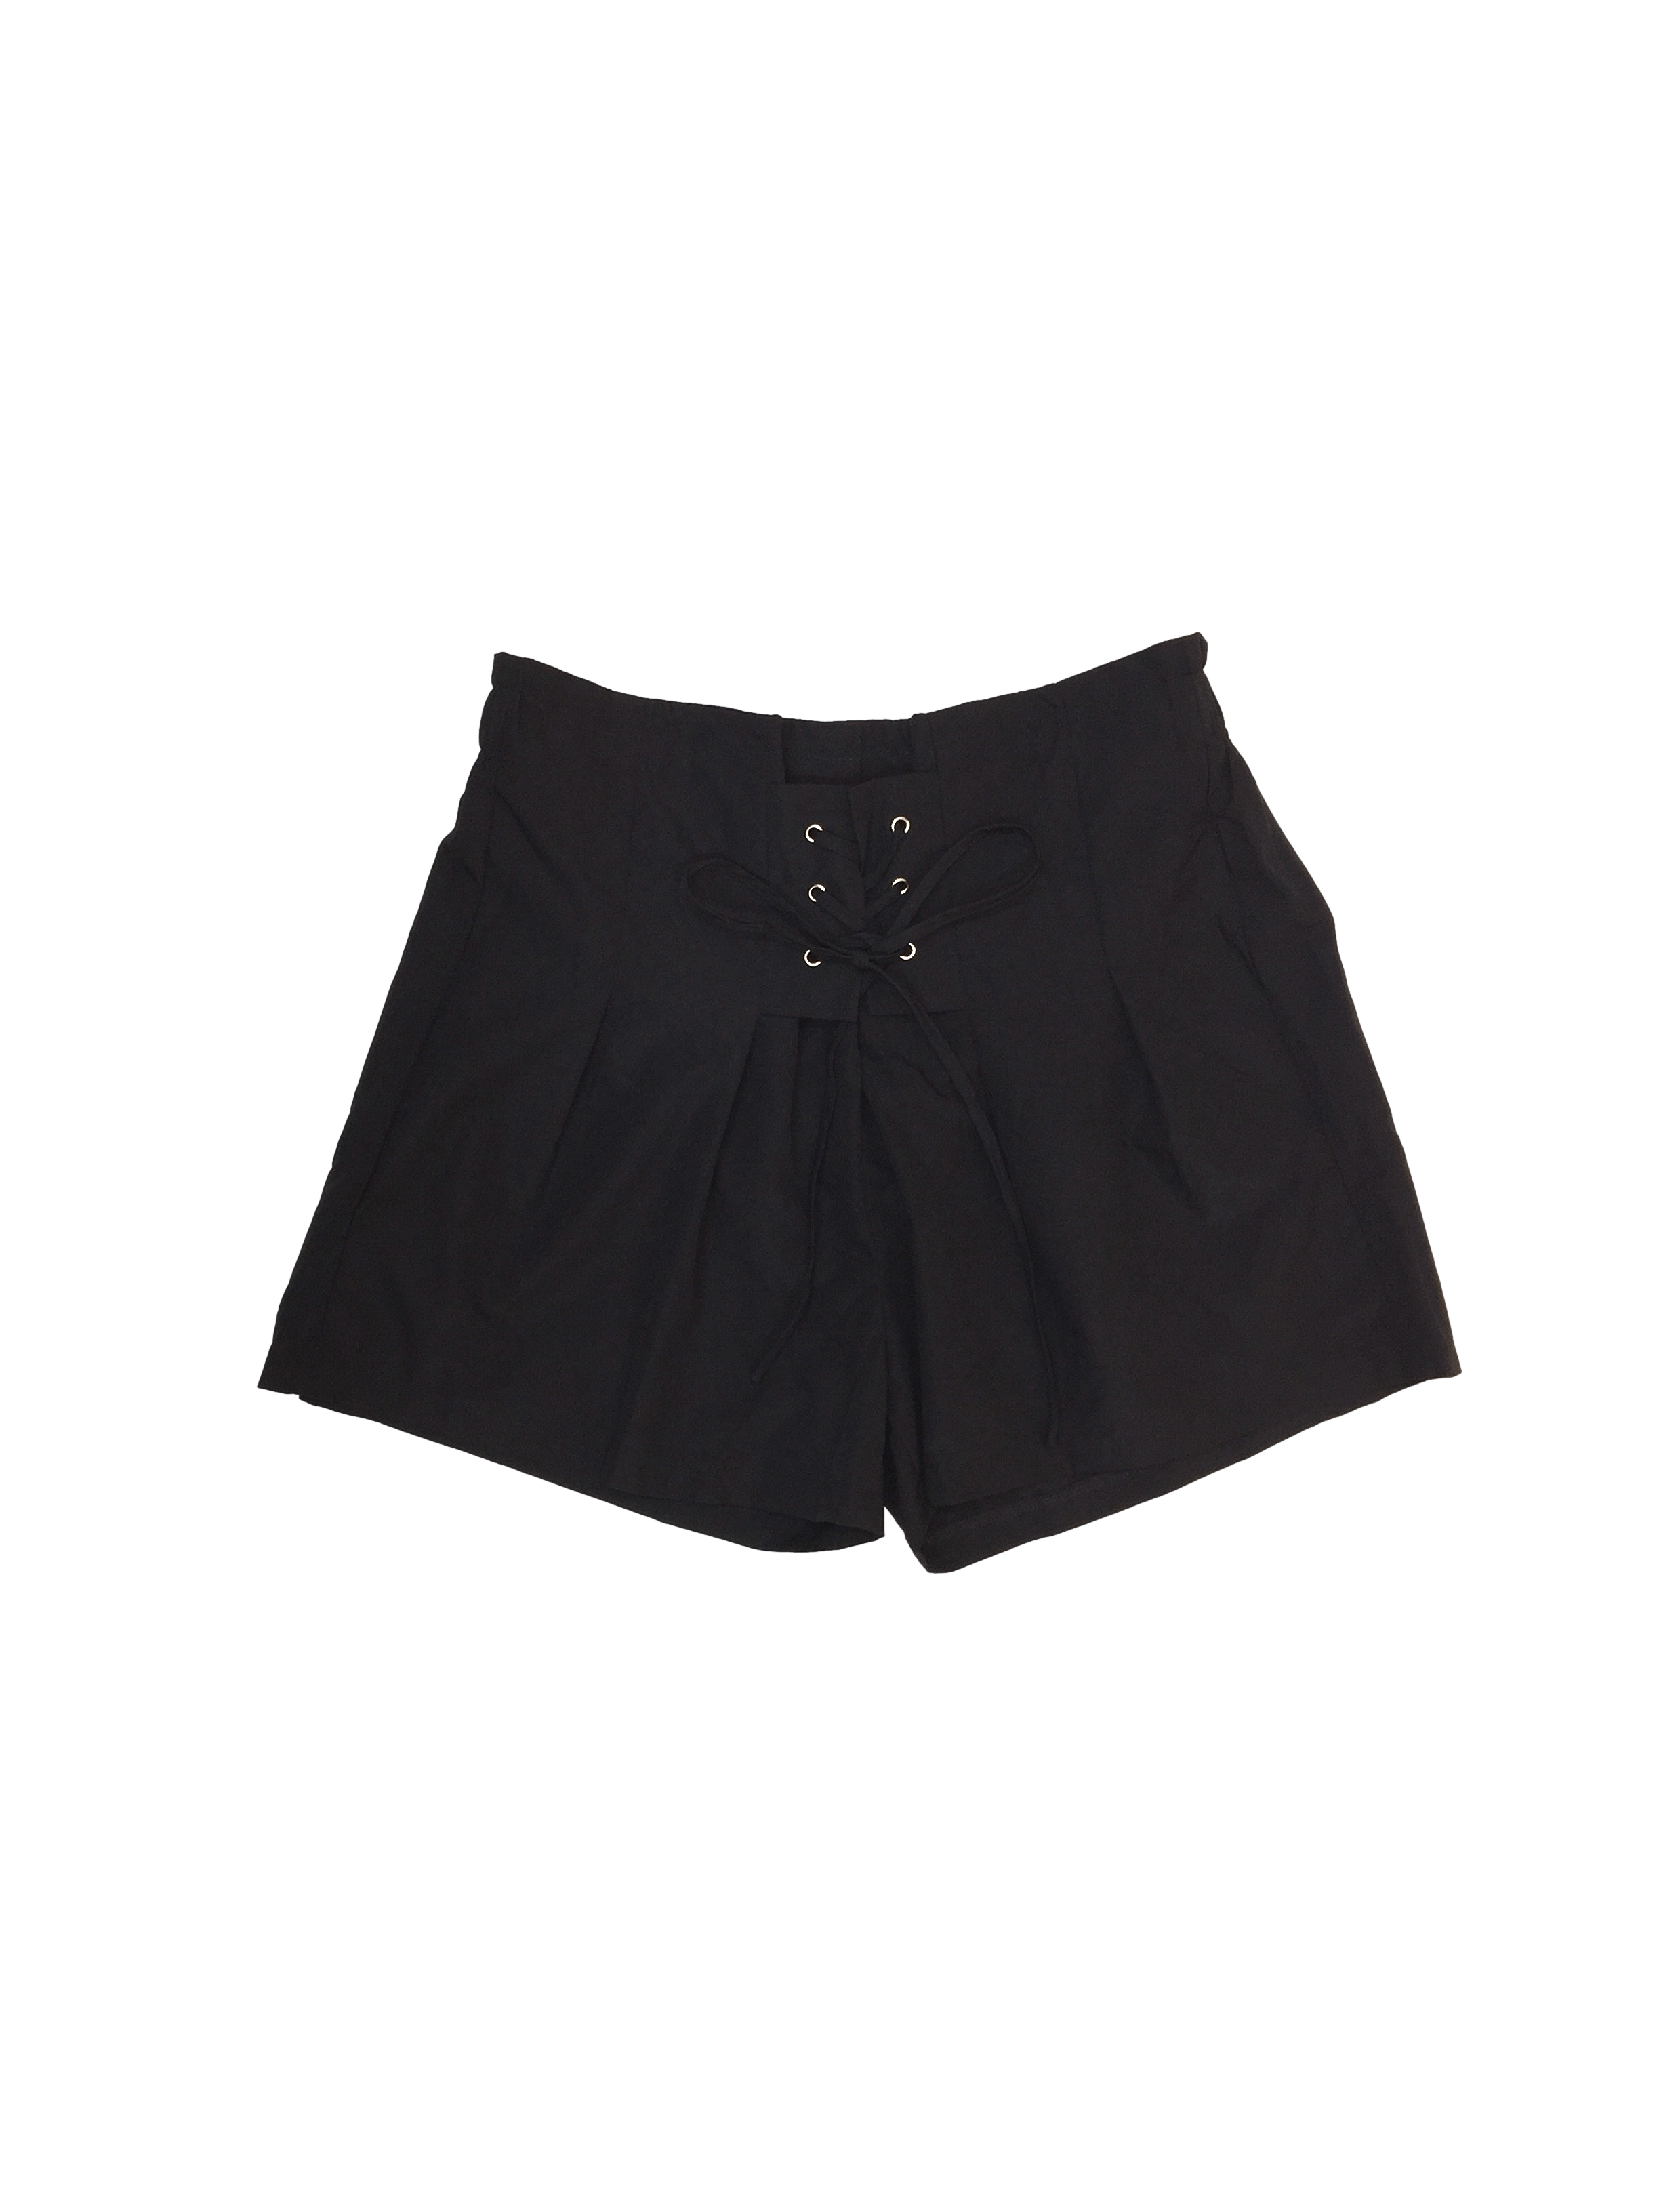 Short negro tipo corset de pretina ancha. Cintura: 80 cm (sin estirar), Tiro: 36 cm, Largo: 43 cm